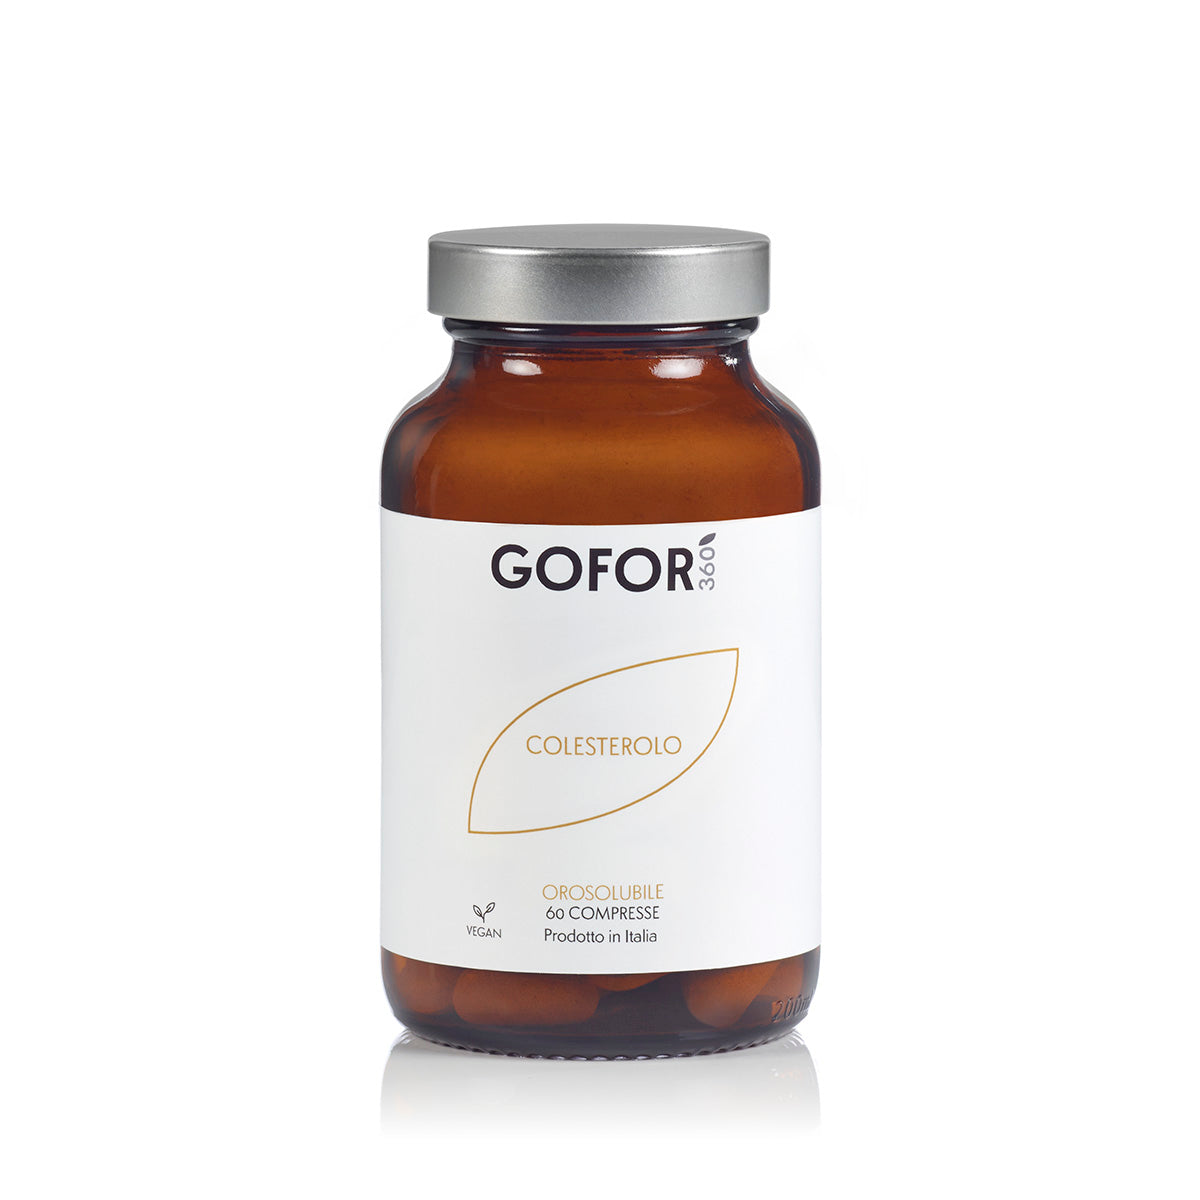 GOFOR360 - Cholesterol